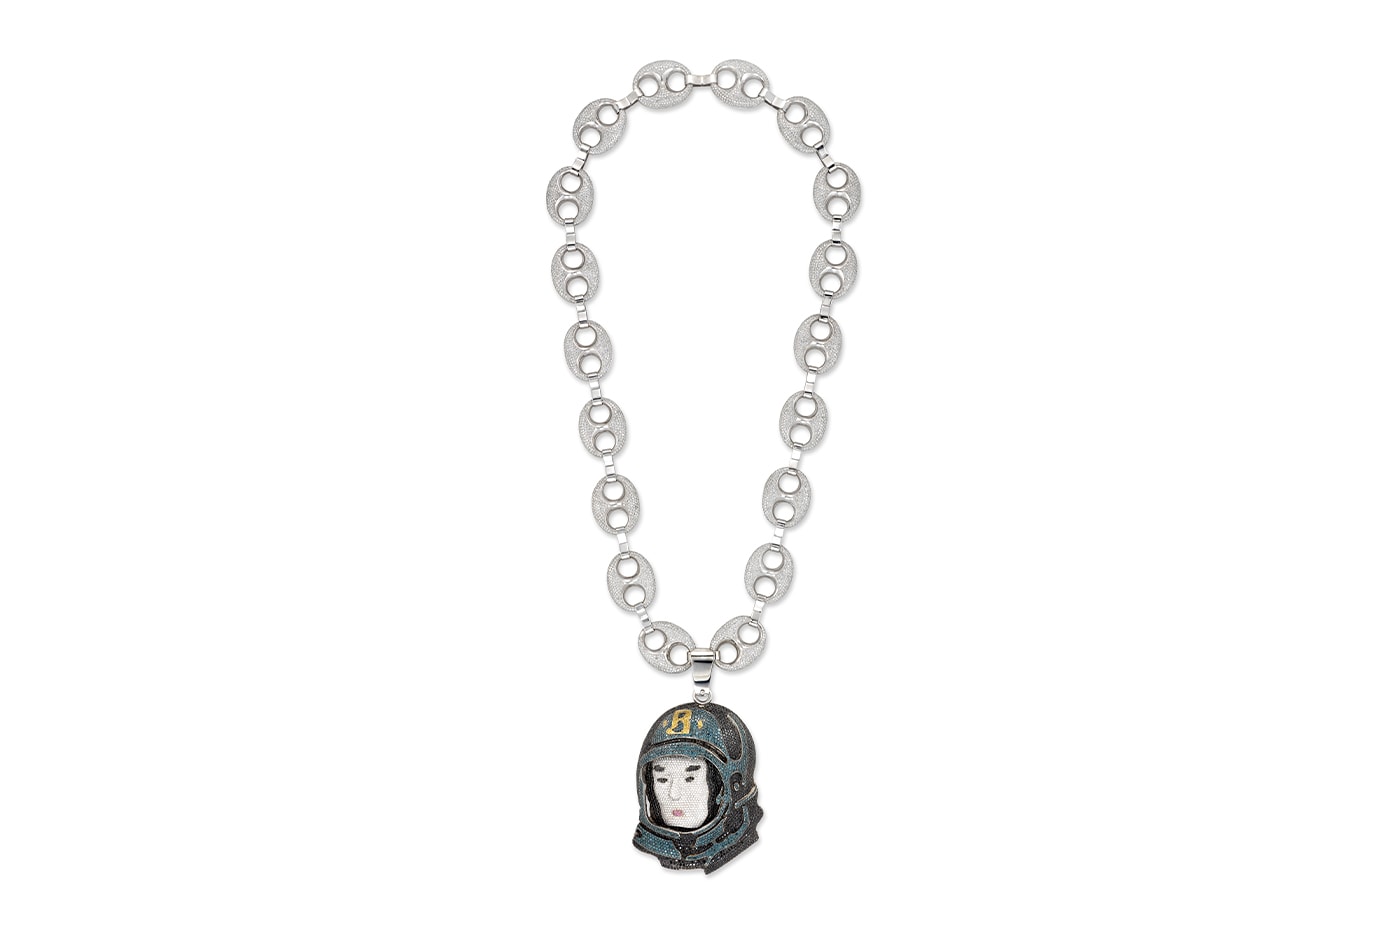 Custom Nigo Vintage Bape Pendant & Necklace with Matching Chain